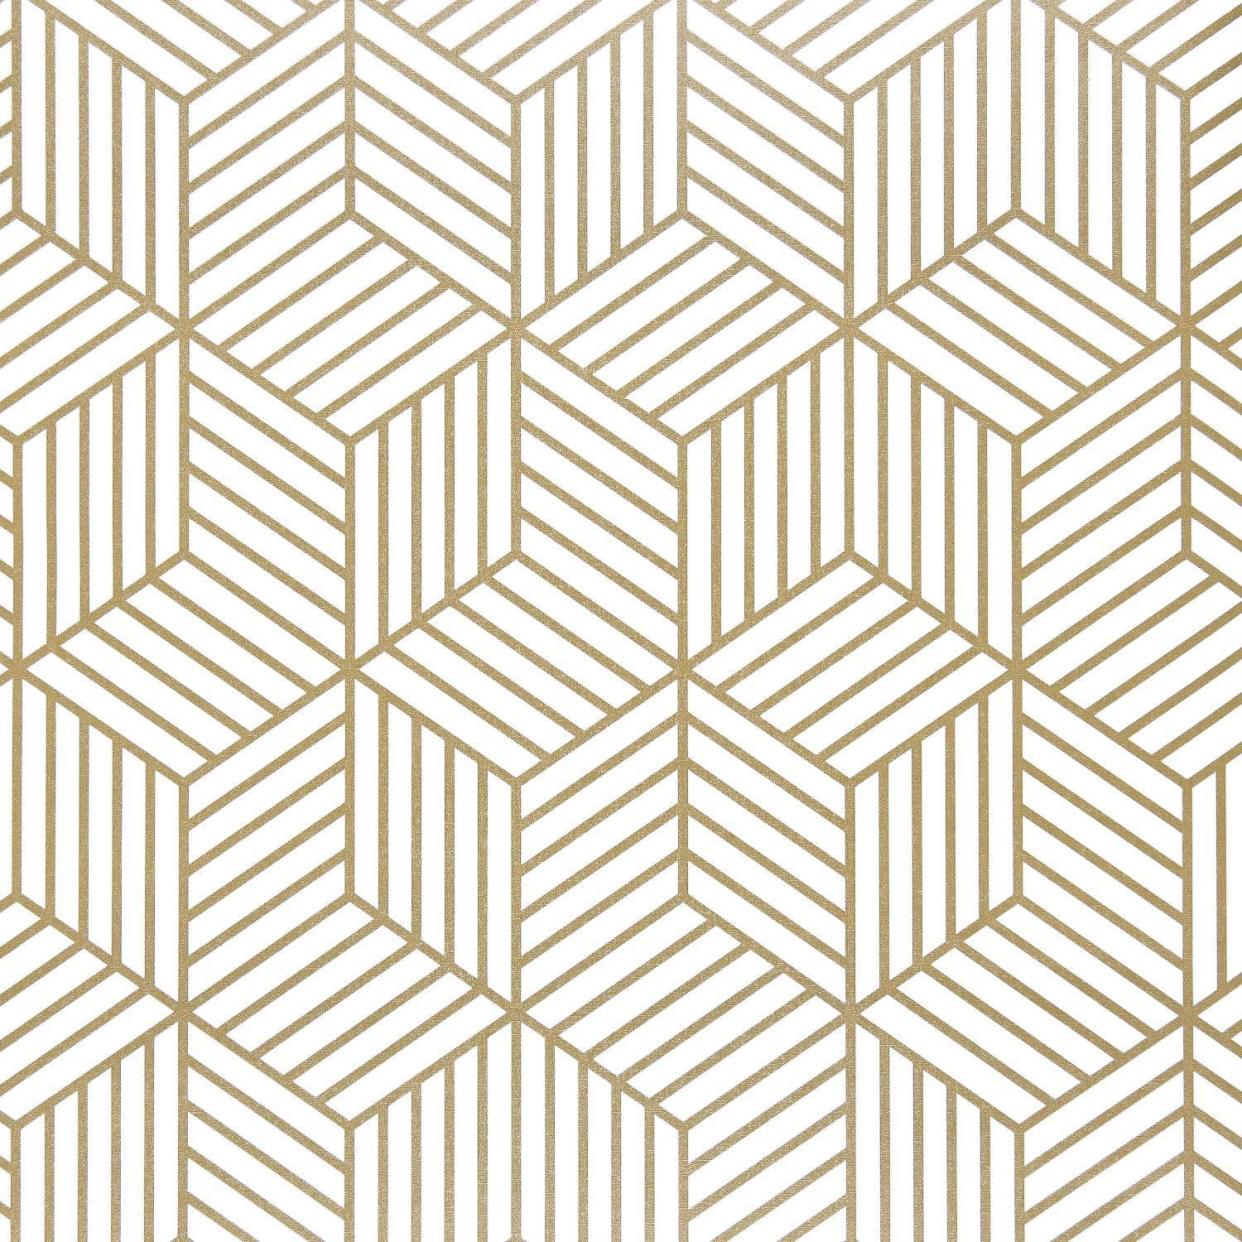 Wenmer Geometric Hexagon Peel and Stick Wallpaper